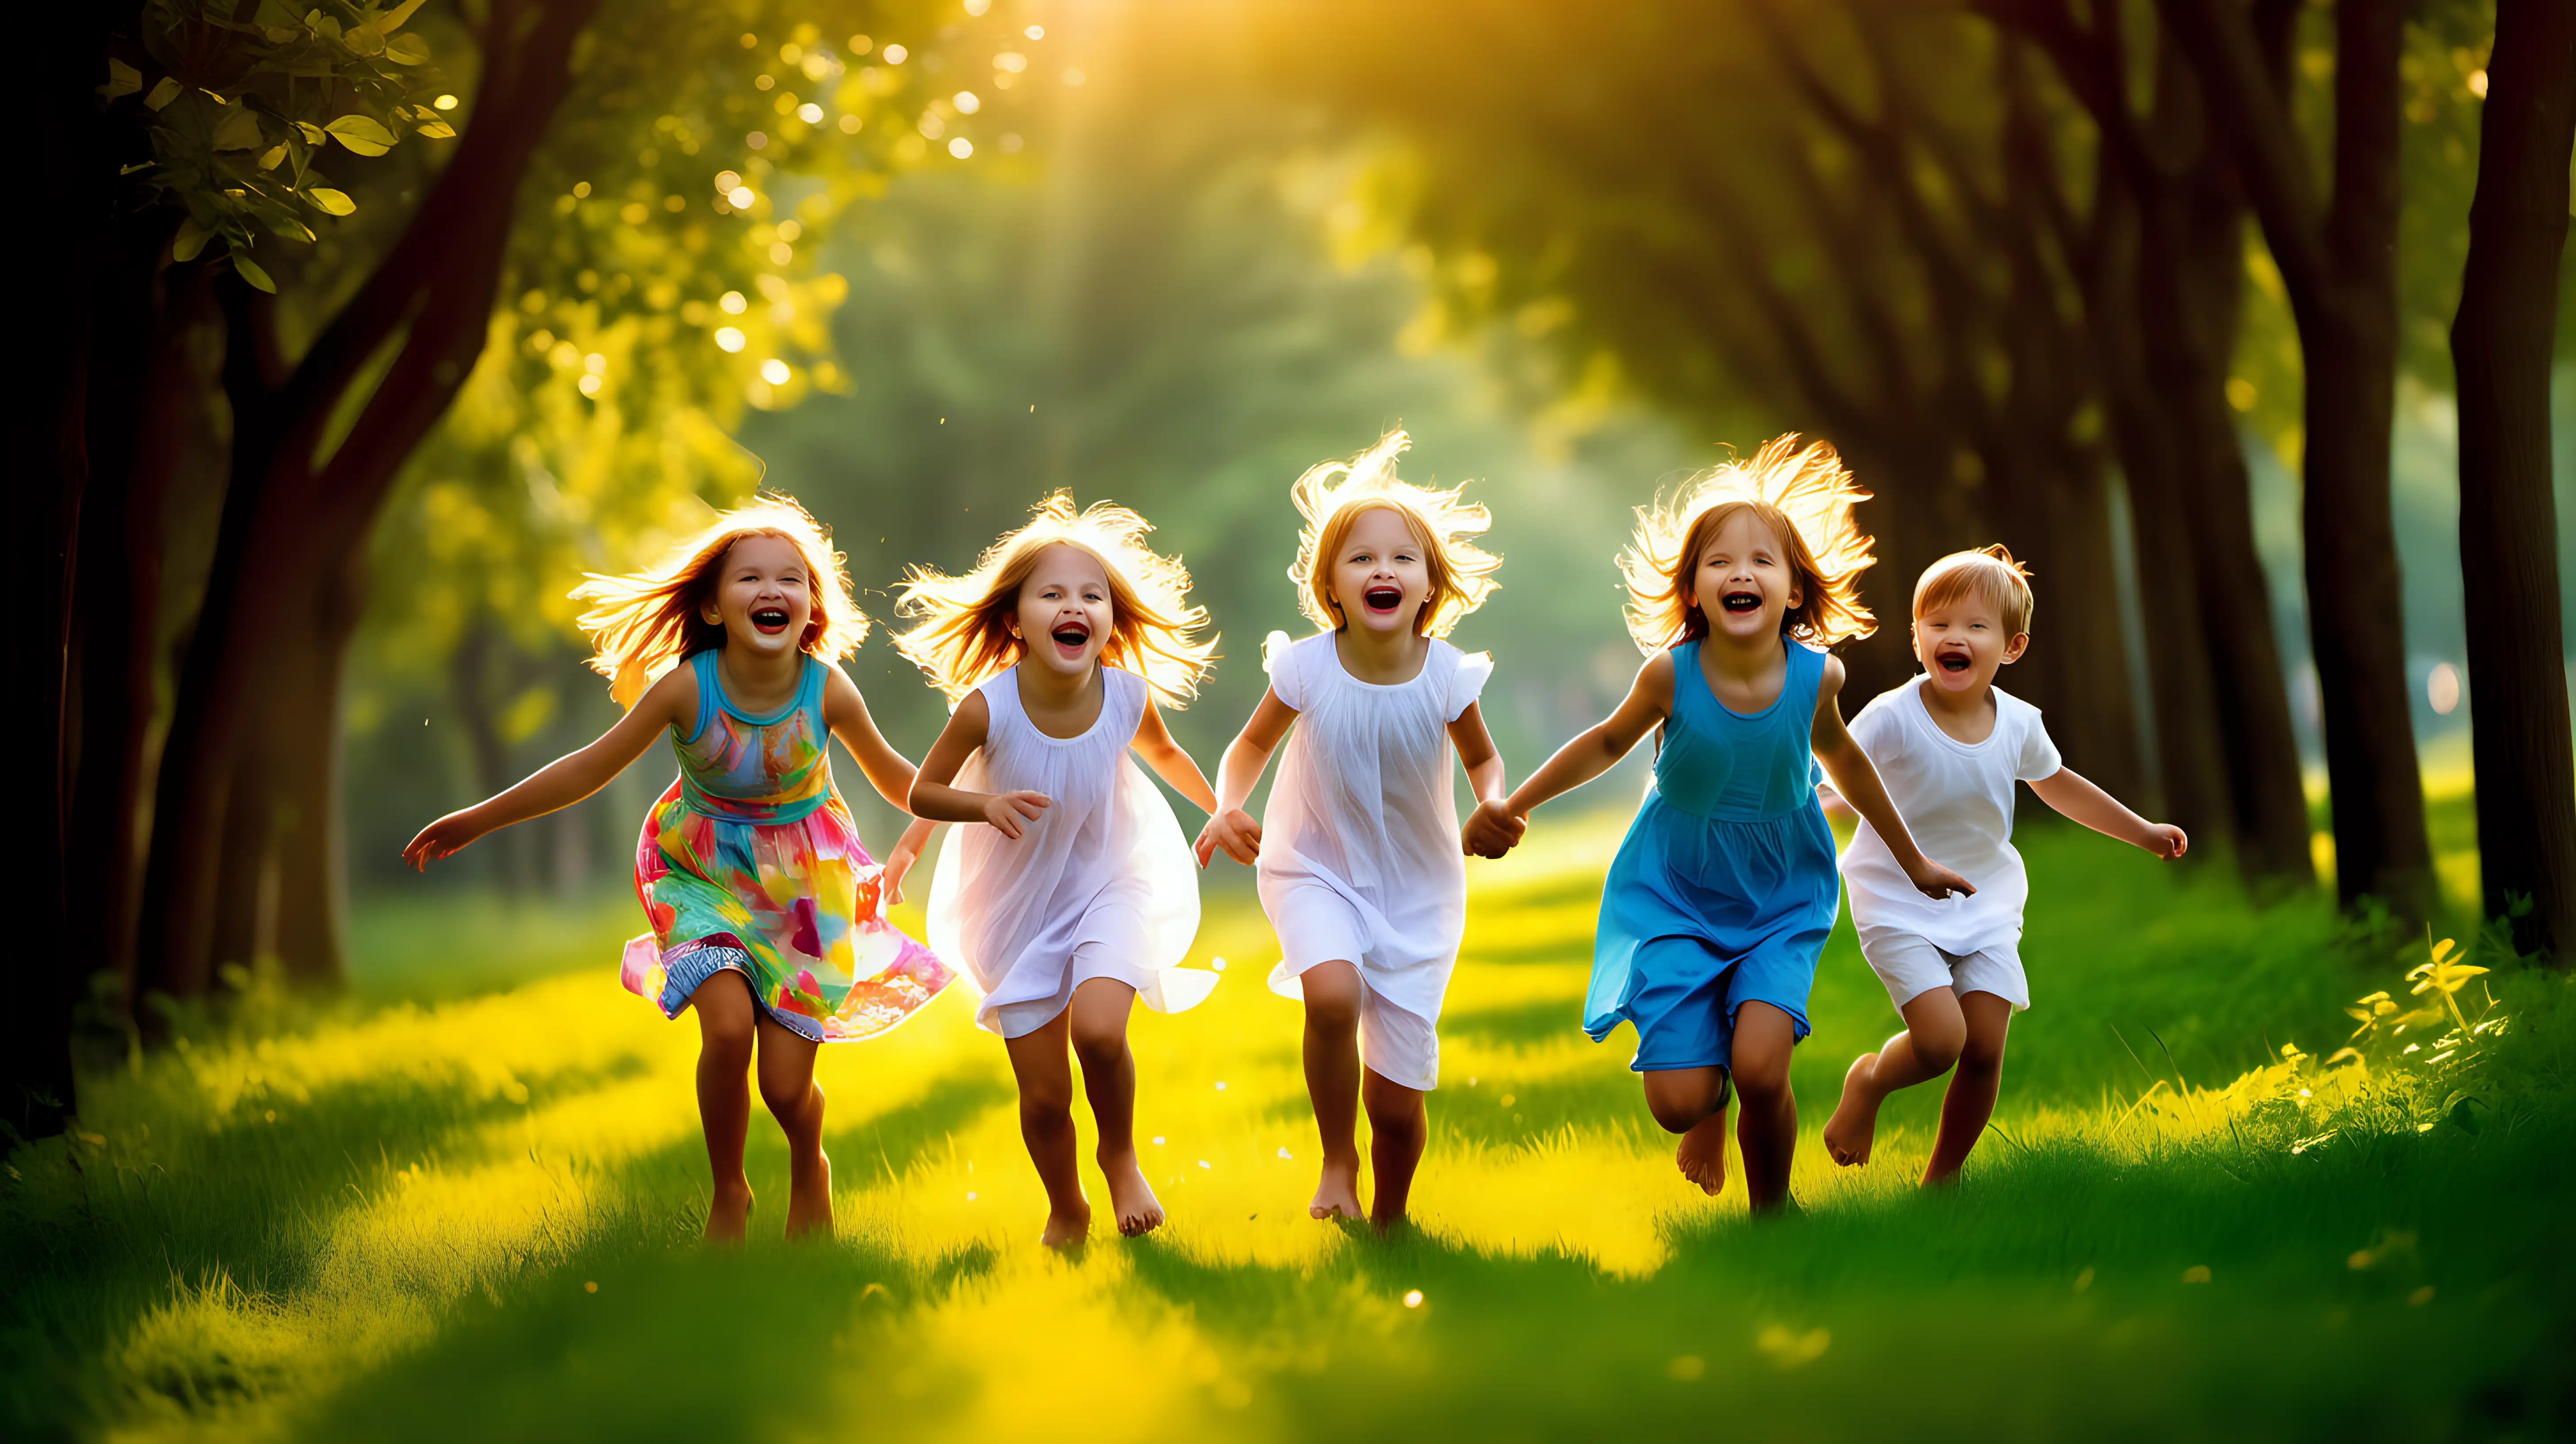 Enchanting Childhood Joy Radiant Children Amidst Vibrant Landscape